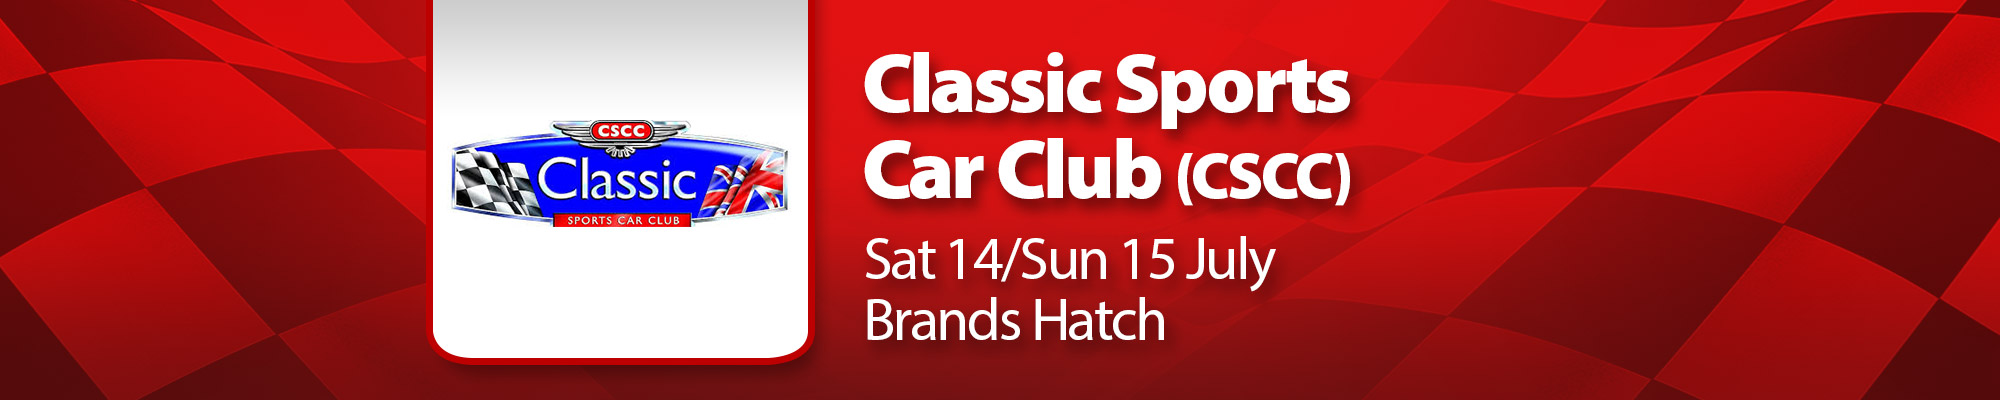 CSCC Classic Car Championships